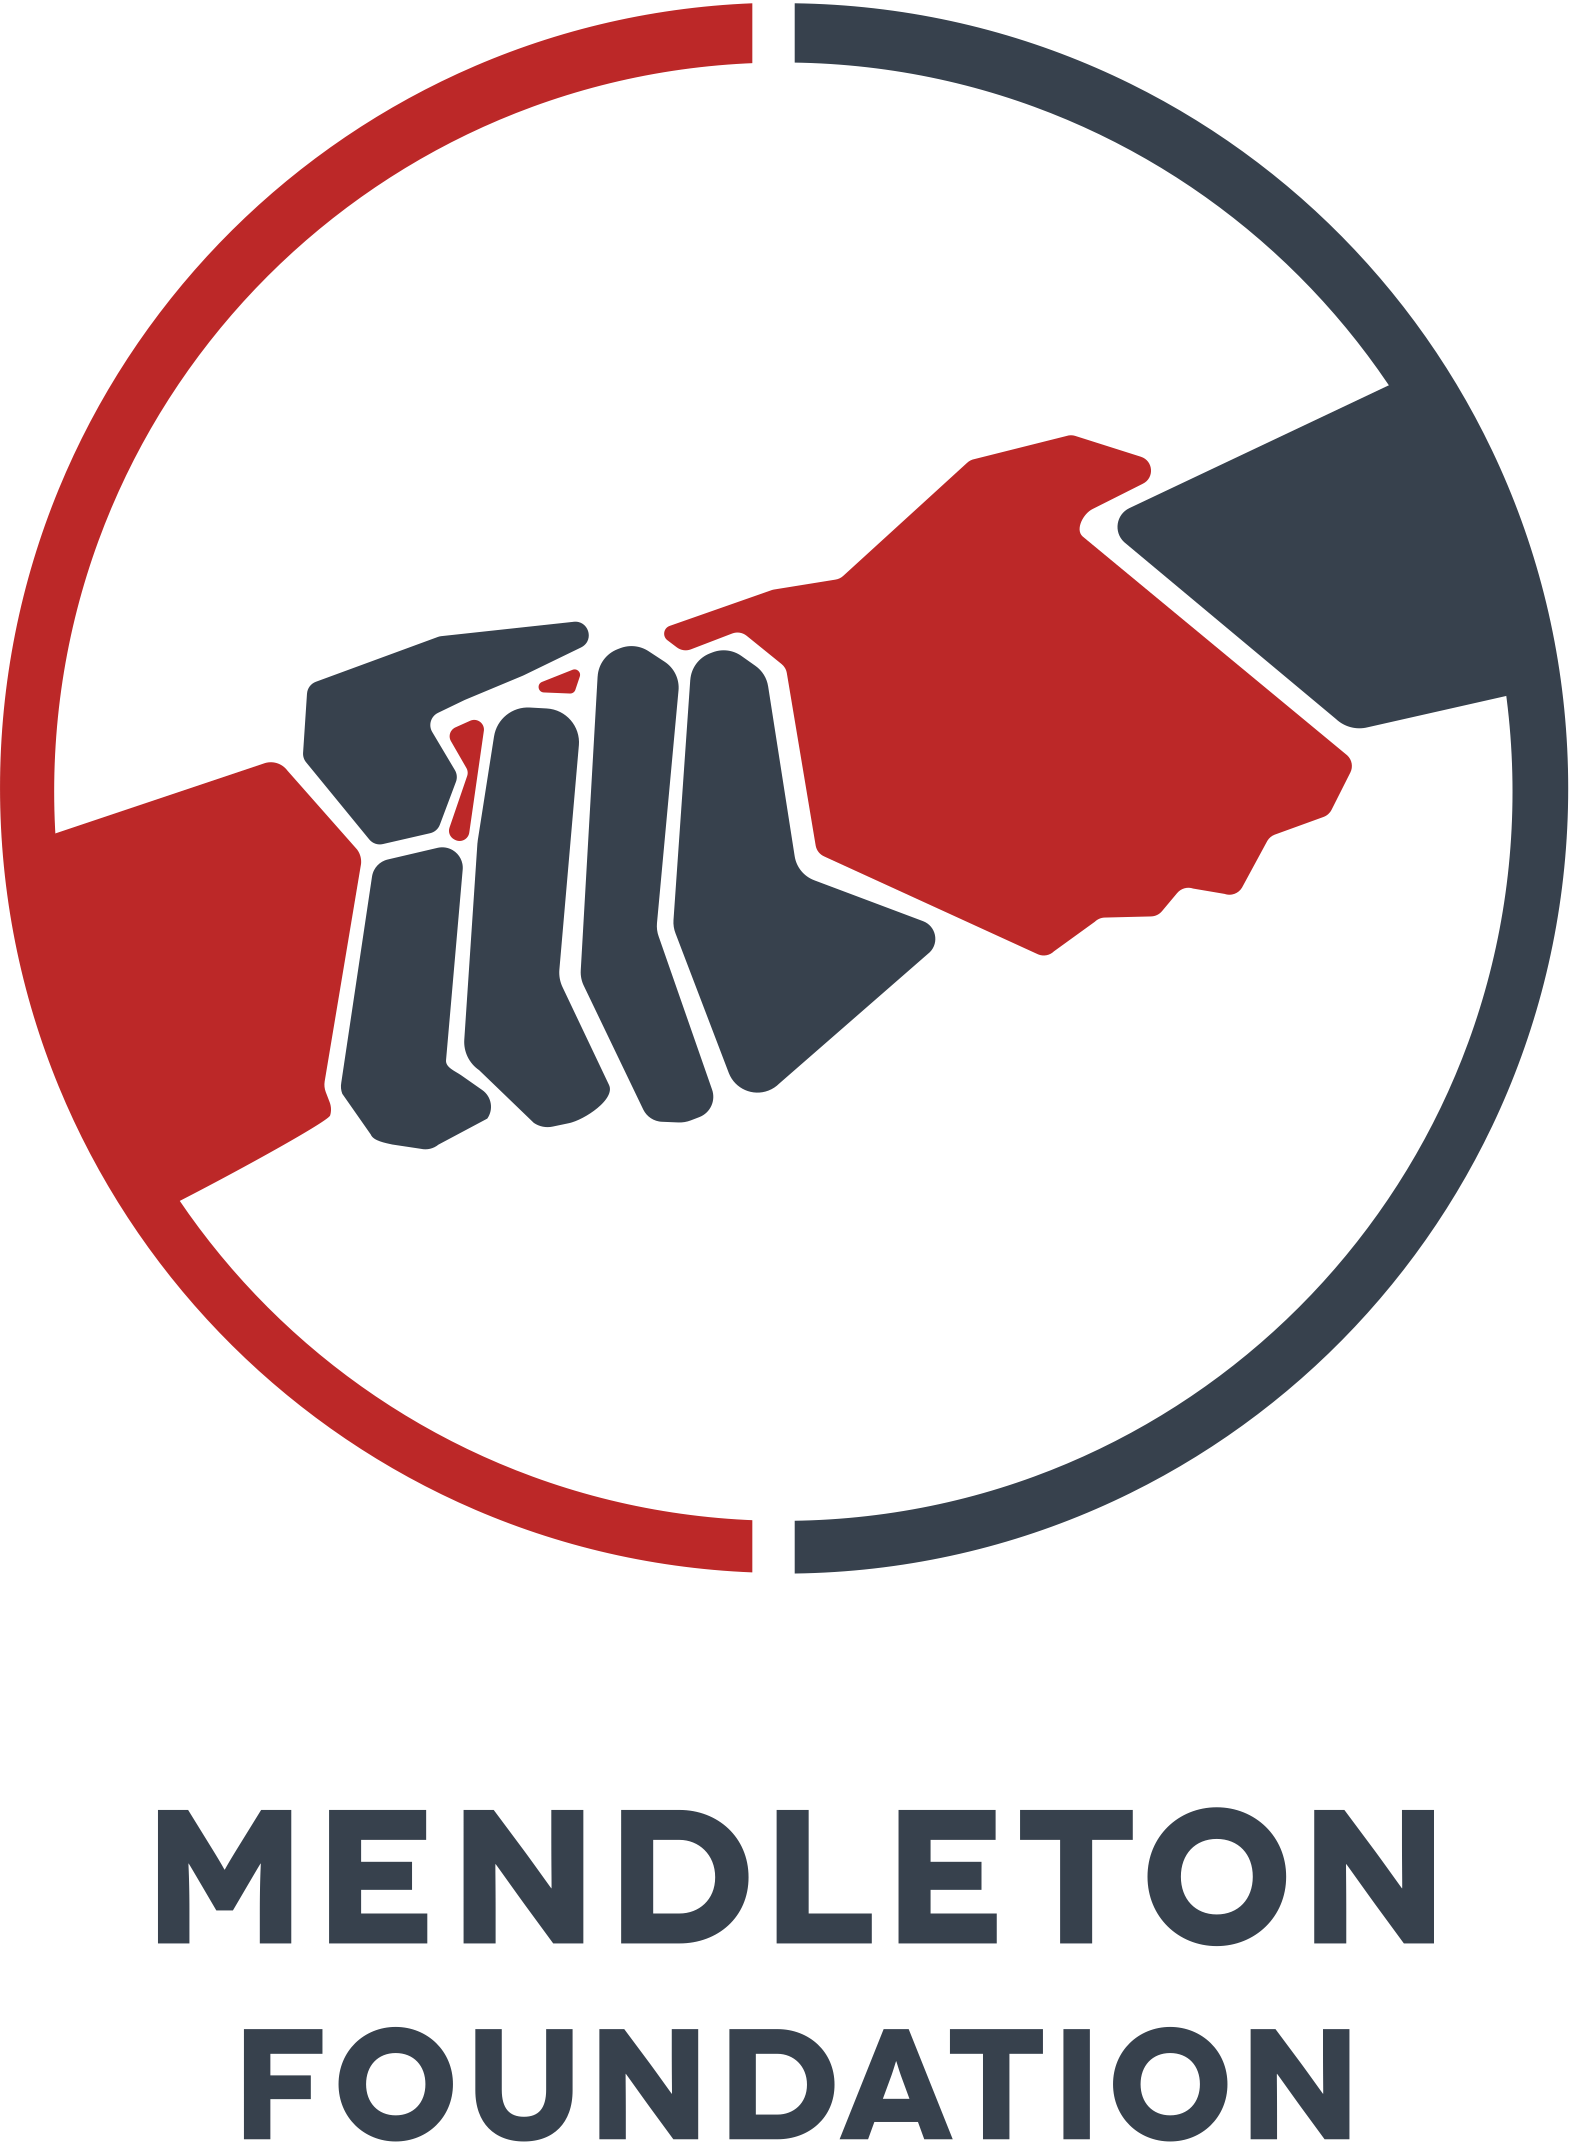 Mendleton Foundation